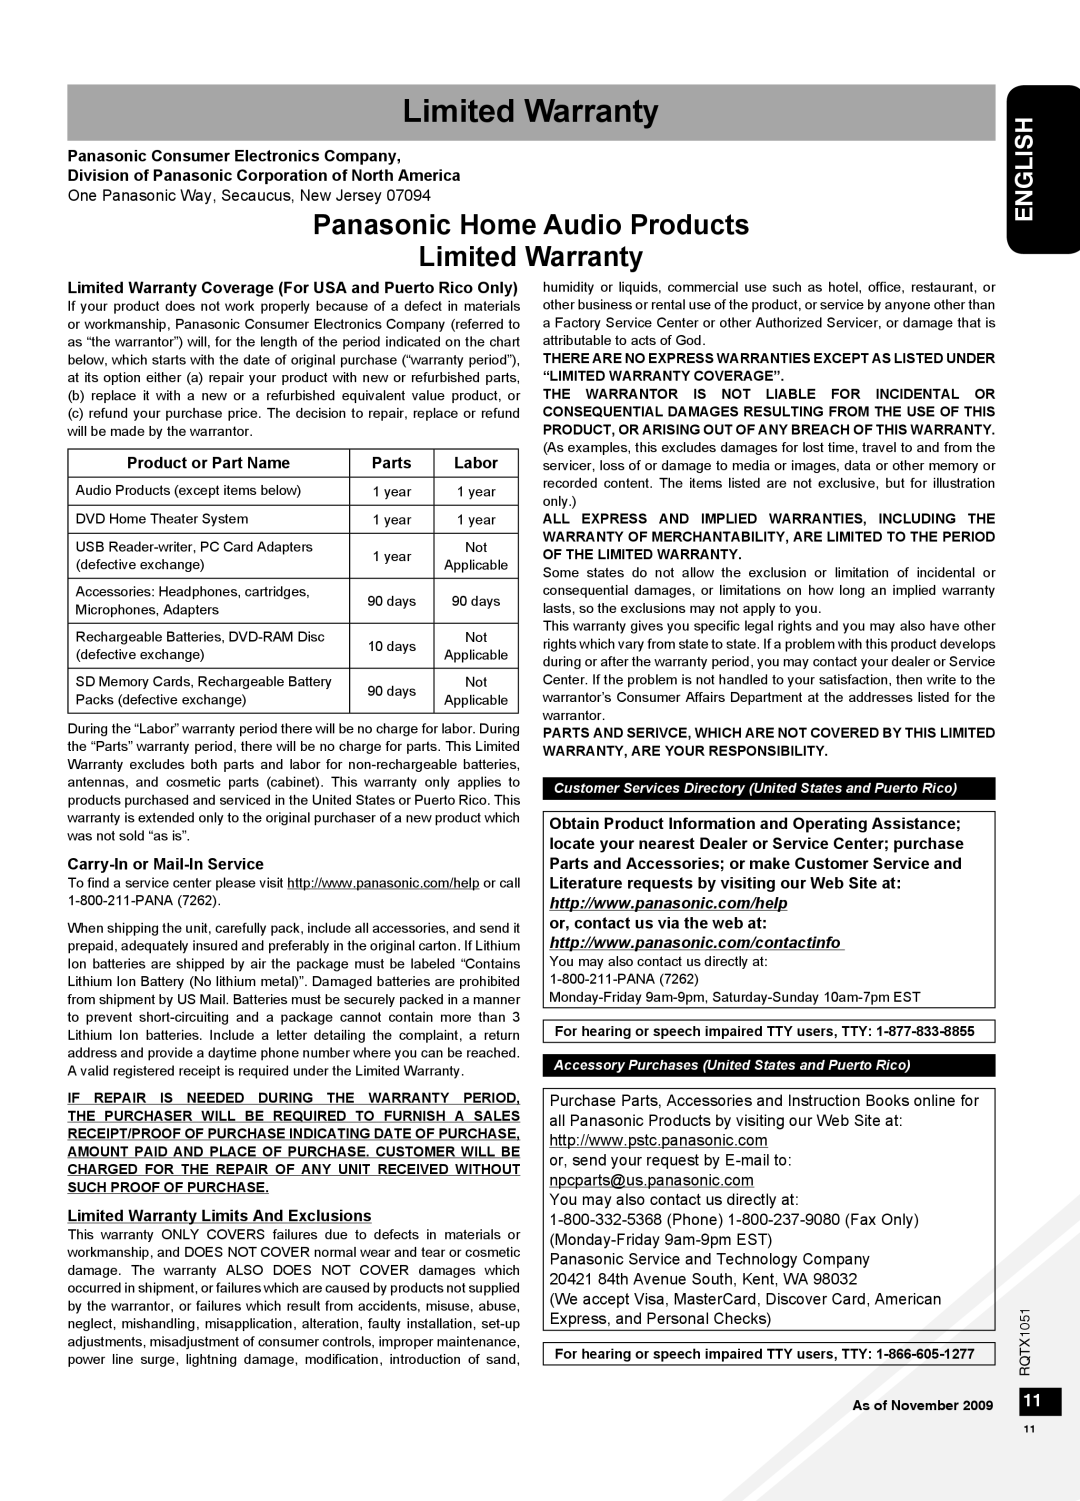 Panasonic SC-HC20 Limited Warranty, Panasonic Consumer Electronics Company, Product or Part Name, Parts, Labor, English 